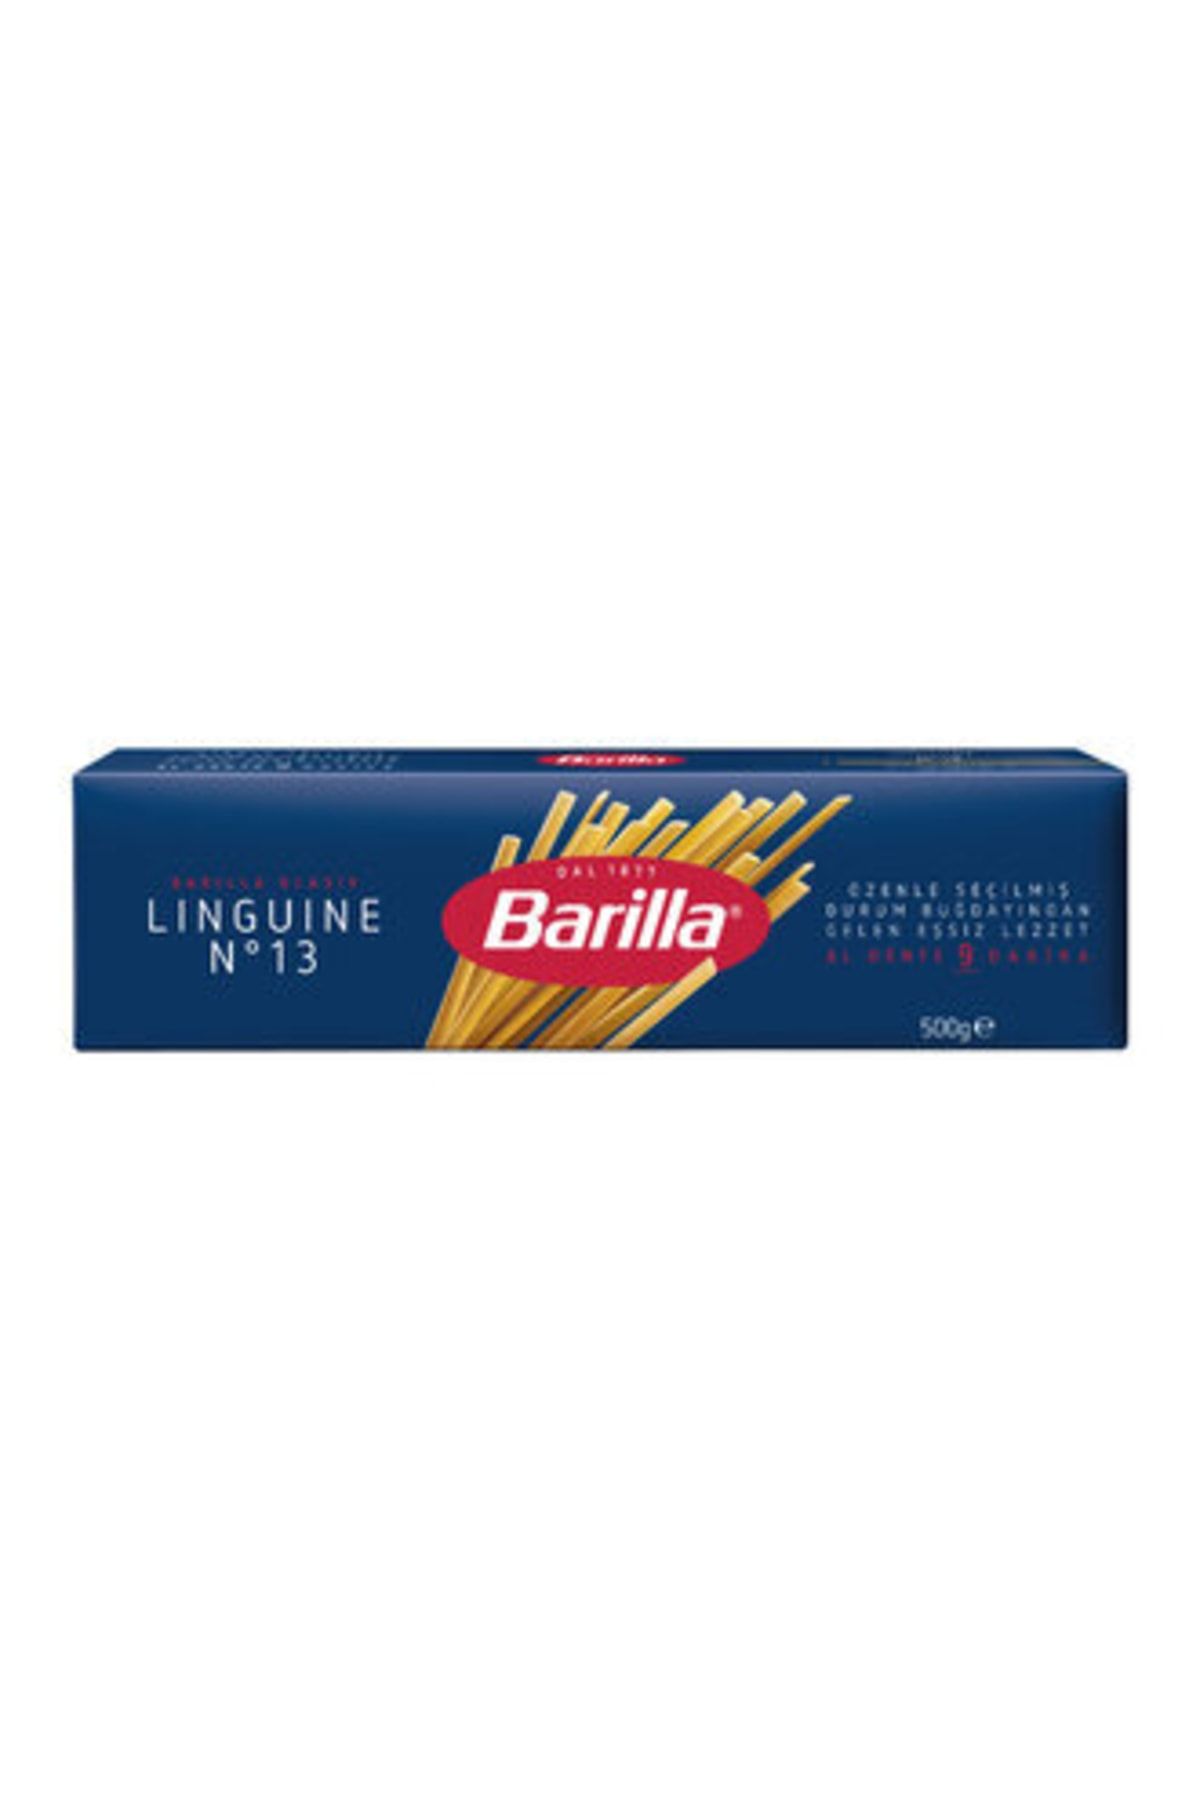 Barilla Linguine (yassı) Spagetti Makarna No.13 500 G